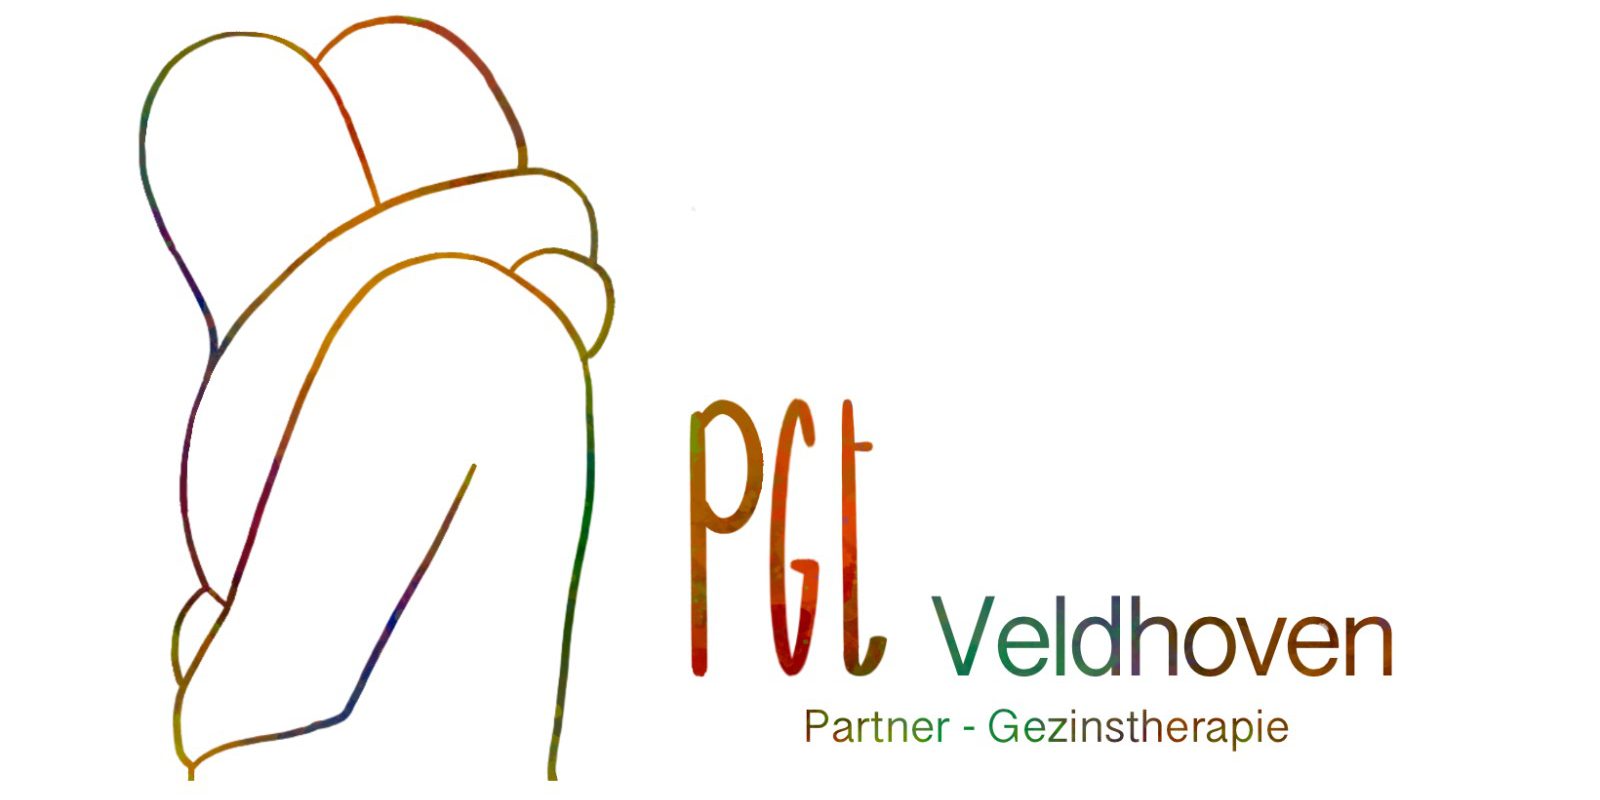 PGT Veldhoven